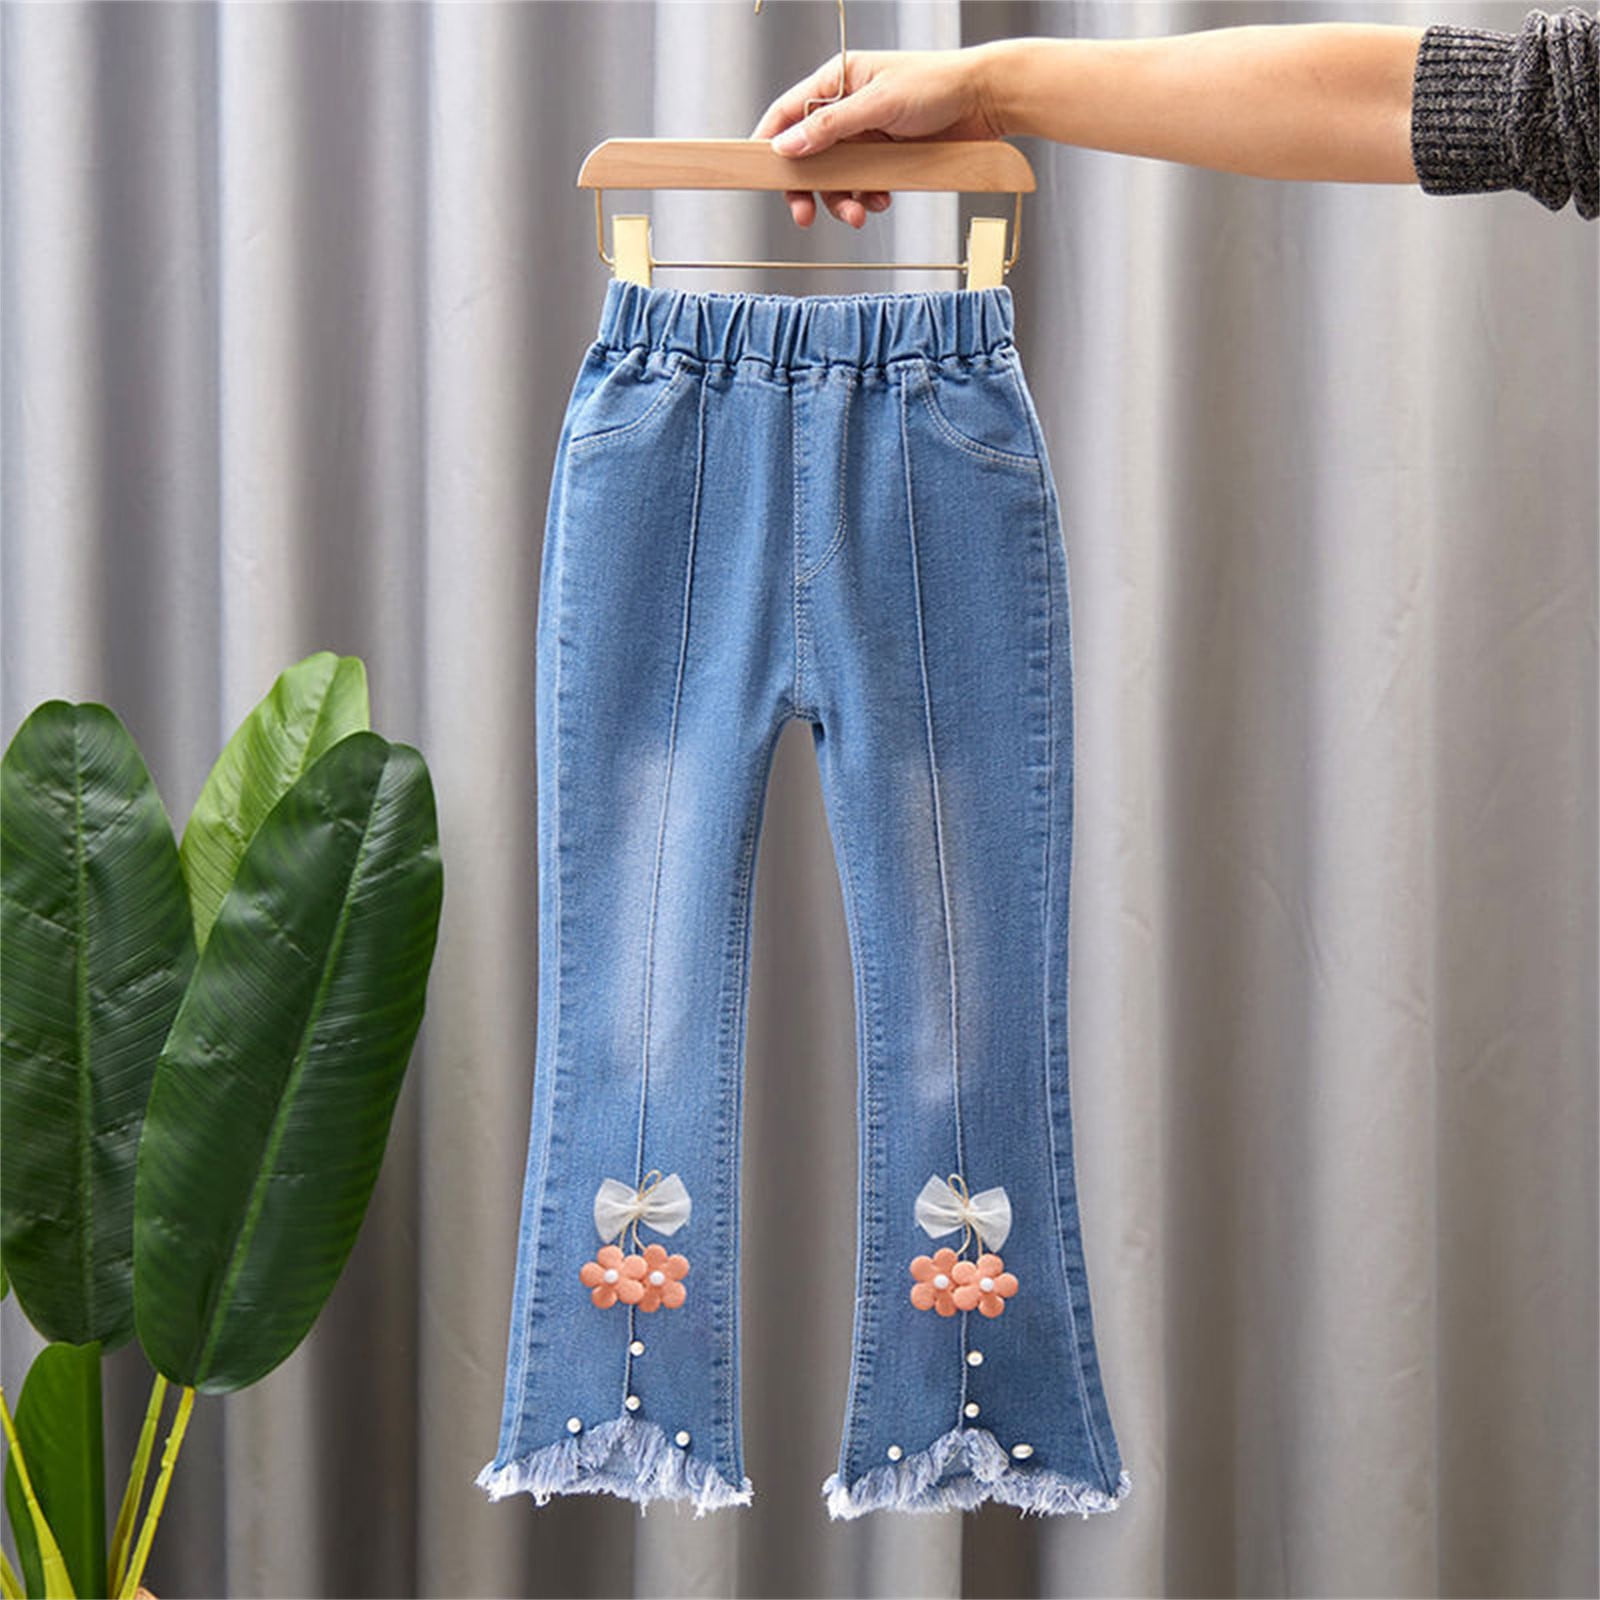 Tdoqot Girls Jeans- Stretch Spring Clothes Pull on Kids Denim Pants ...